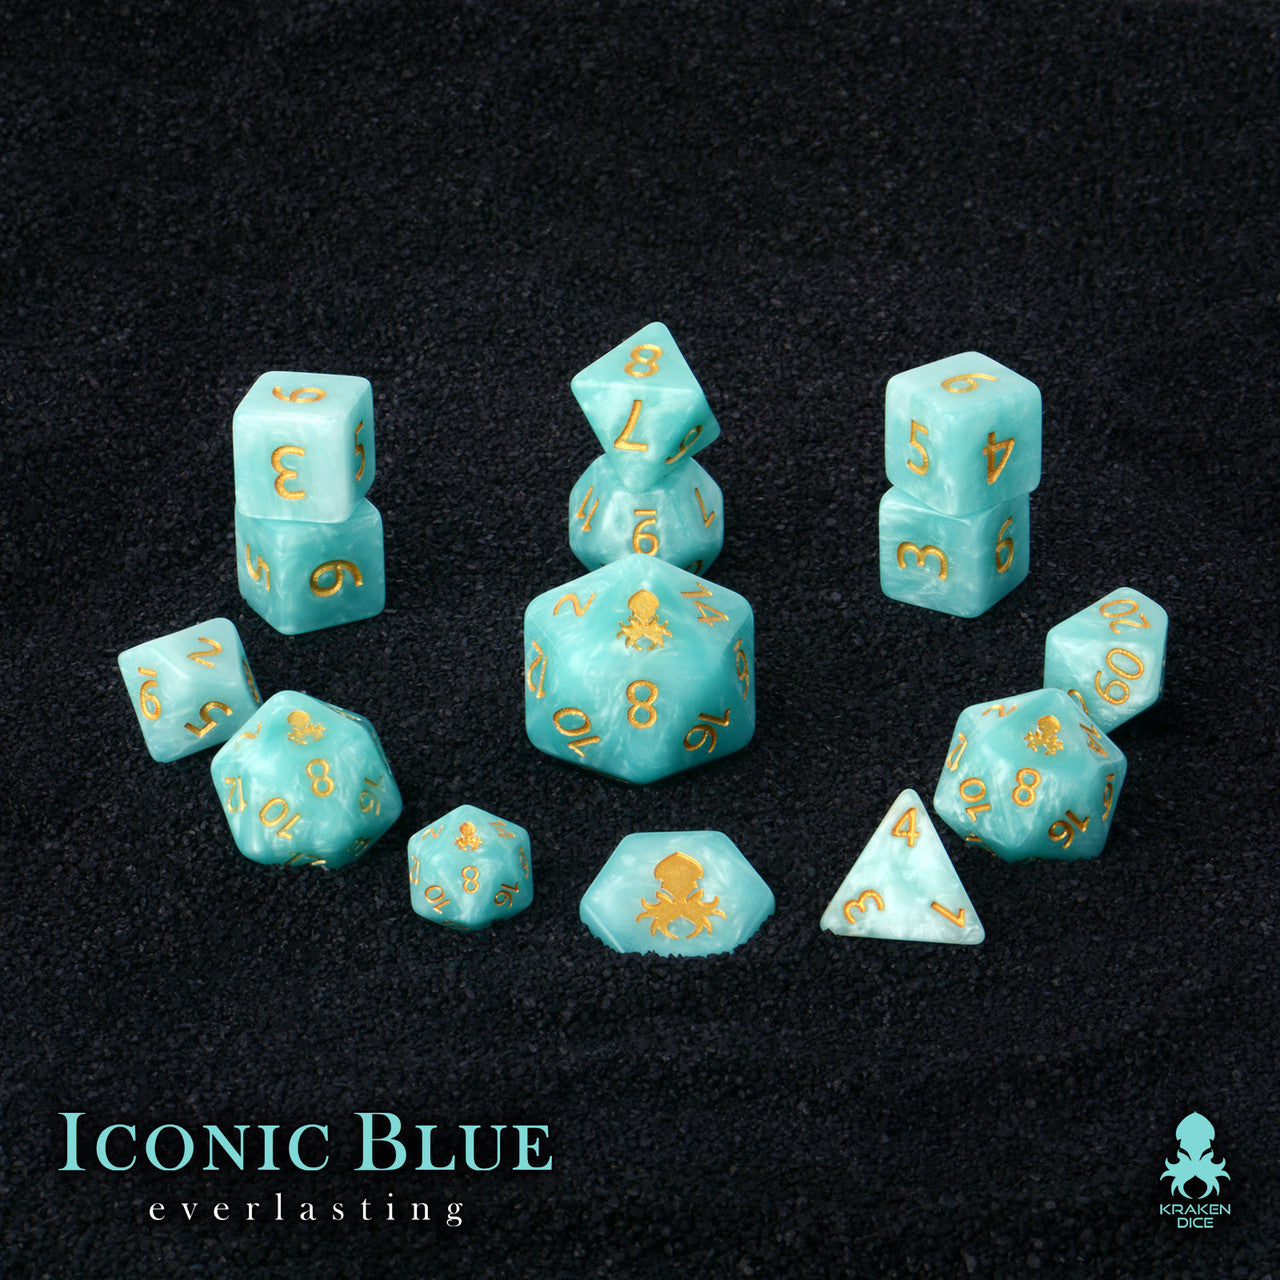 Kraken Dice - Iconic Blue: Everlasting 14pc Polyhedral Dice Set - Bards & Cards